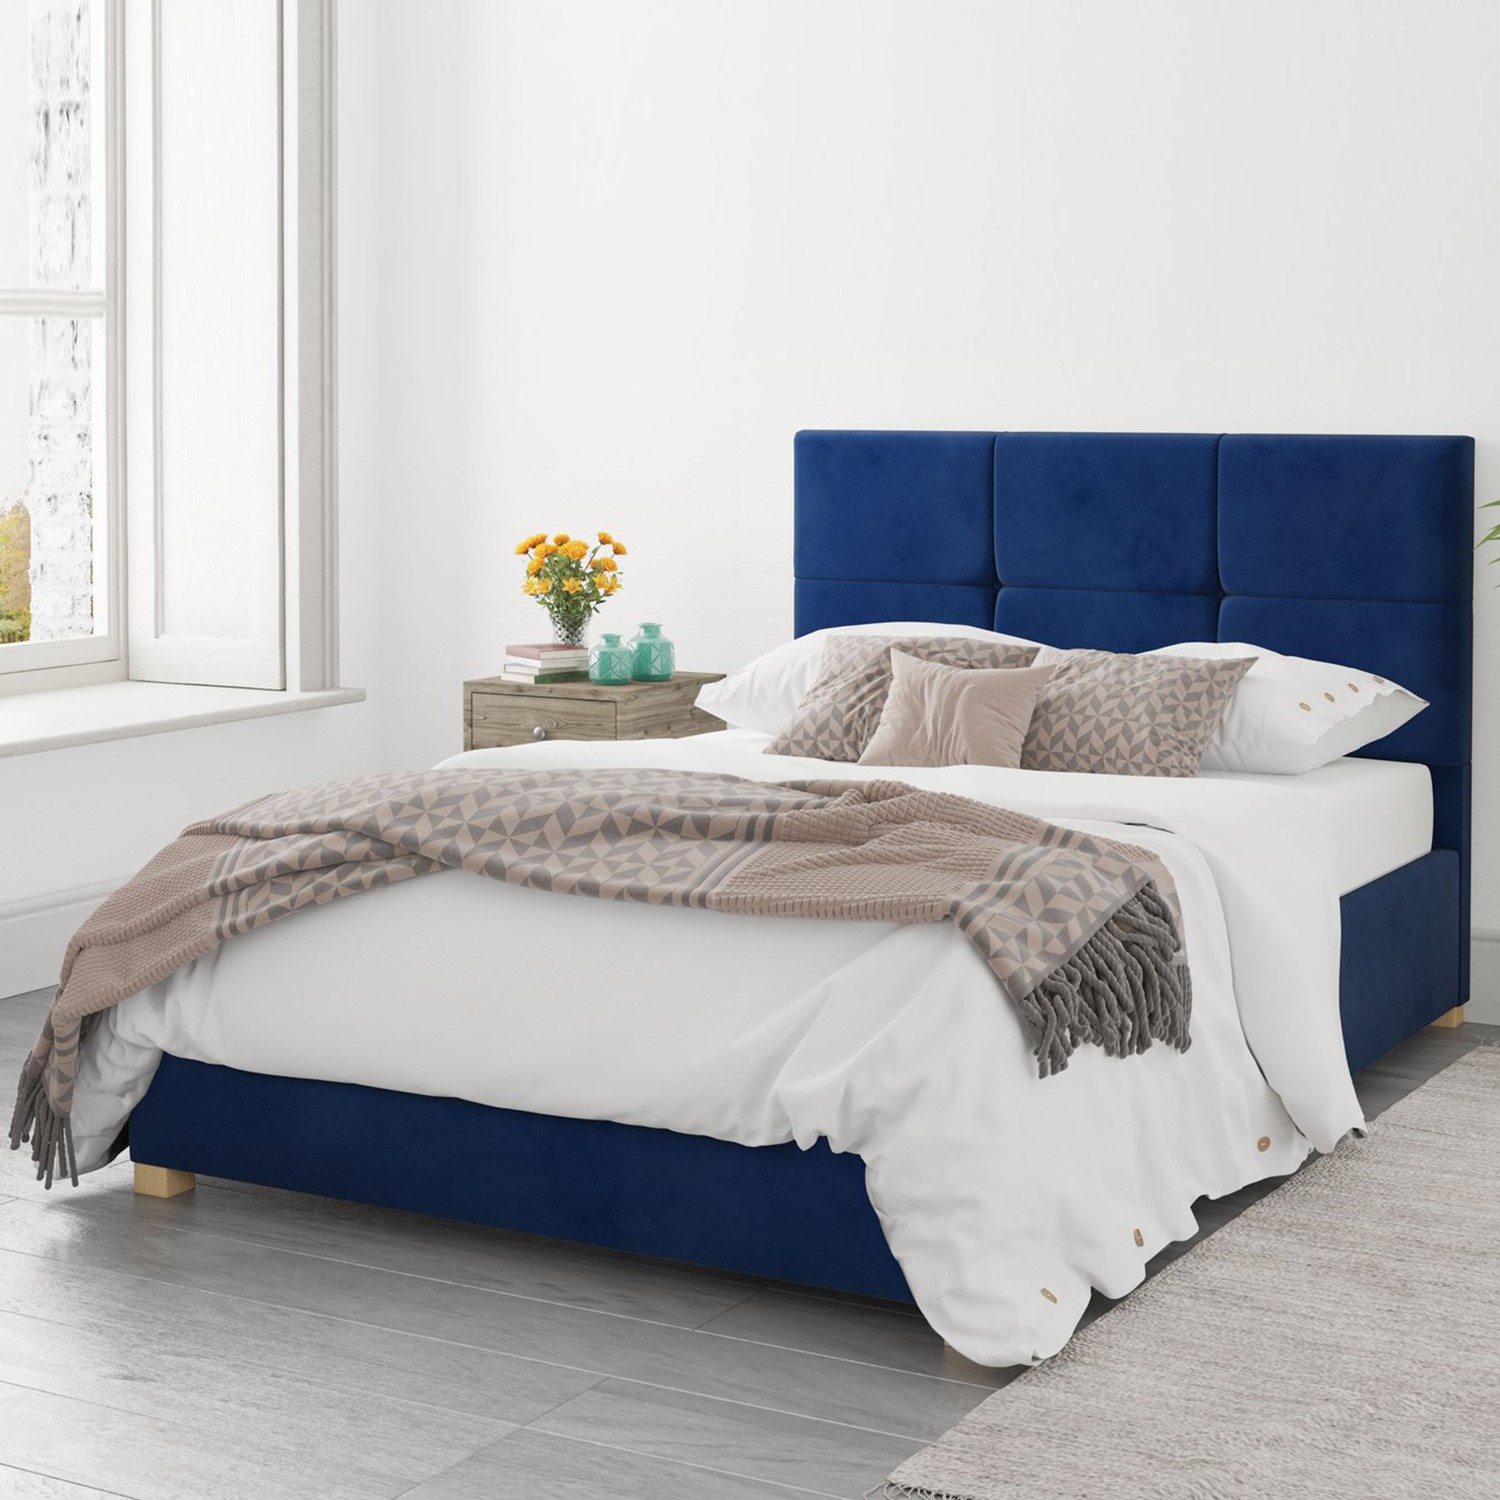 Read more about Navy blue velvet super king size ottoman bed farringdon aspire